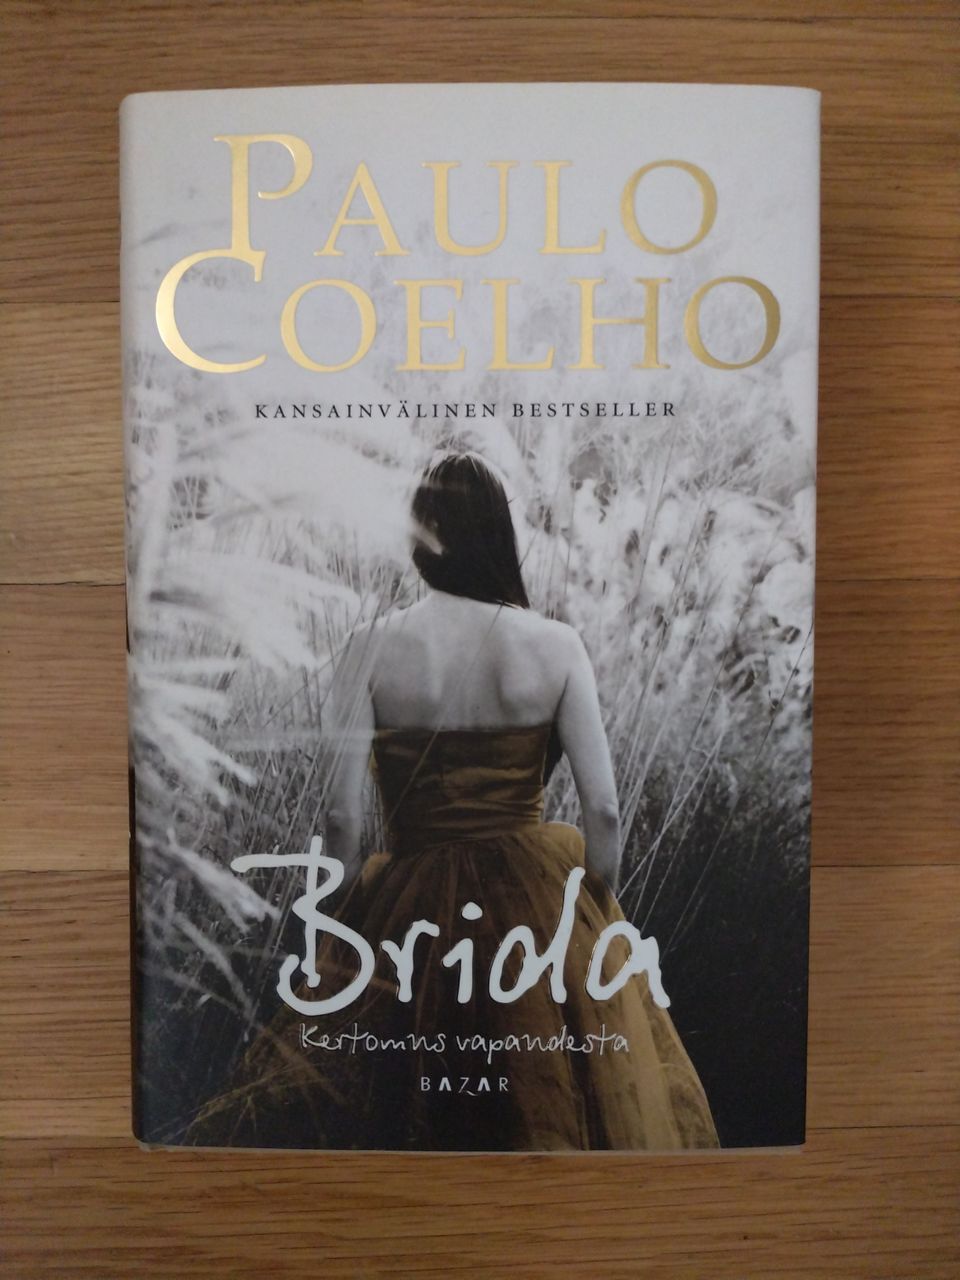 Paulo Coelho: Briola